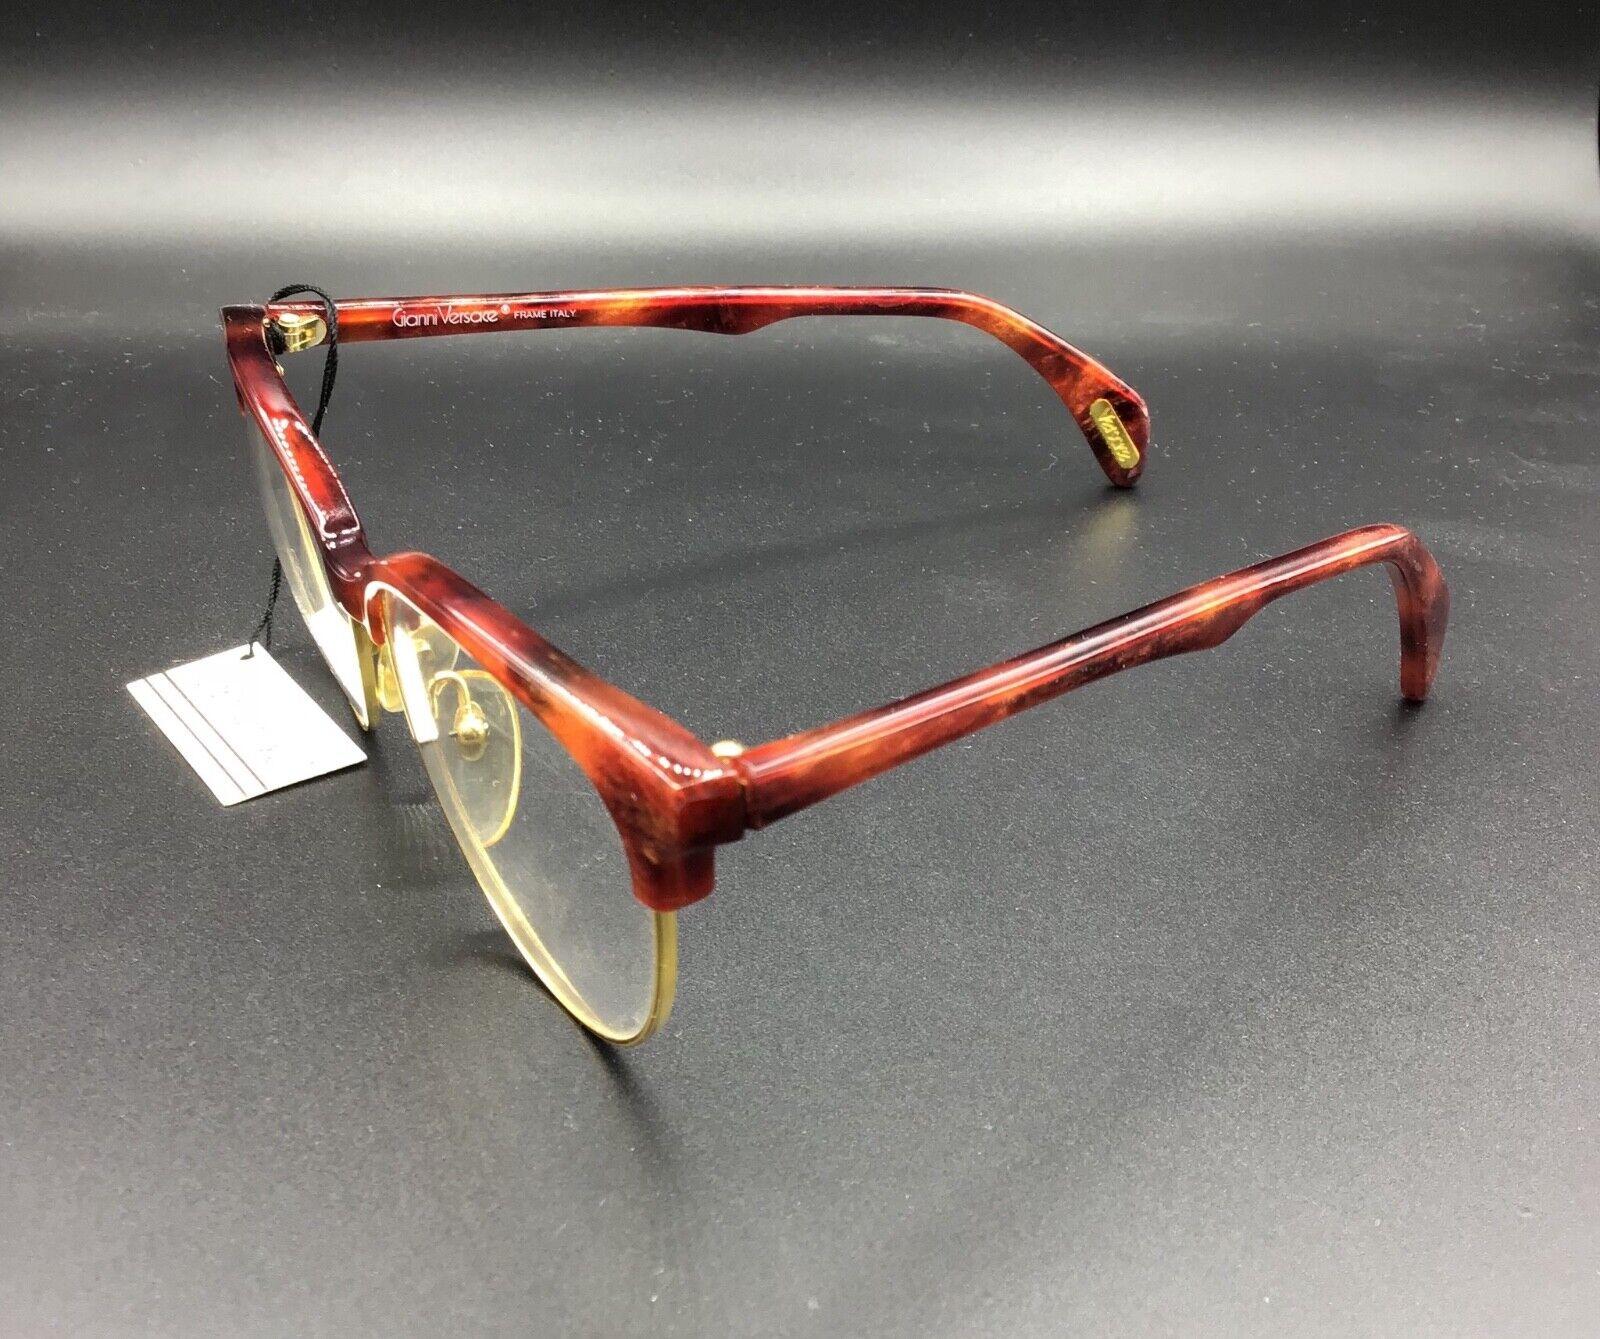 Gianni Versace occhiale vintage Eyewear frame Italy model 468. Col 927 glasses